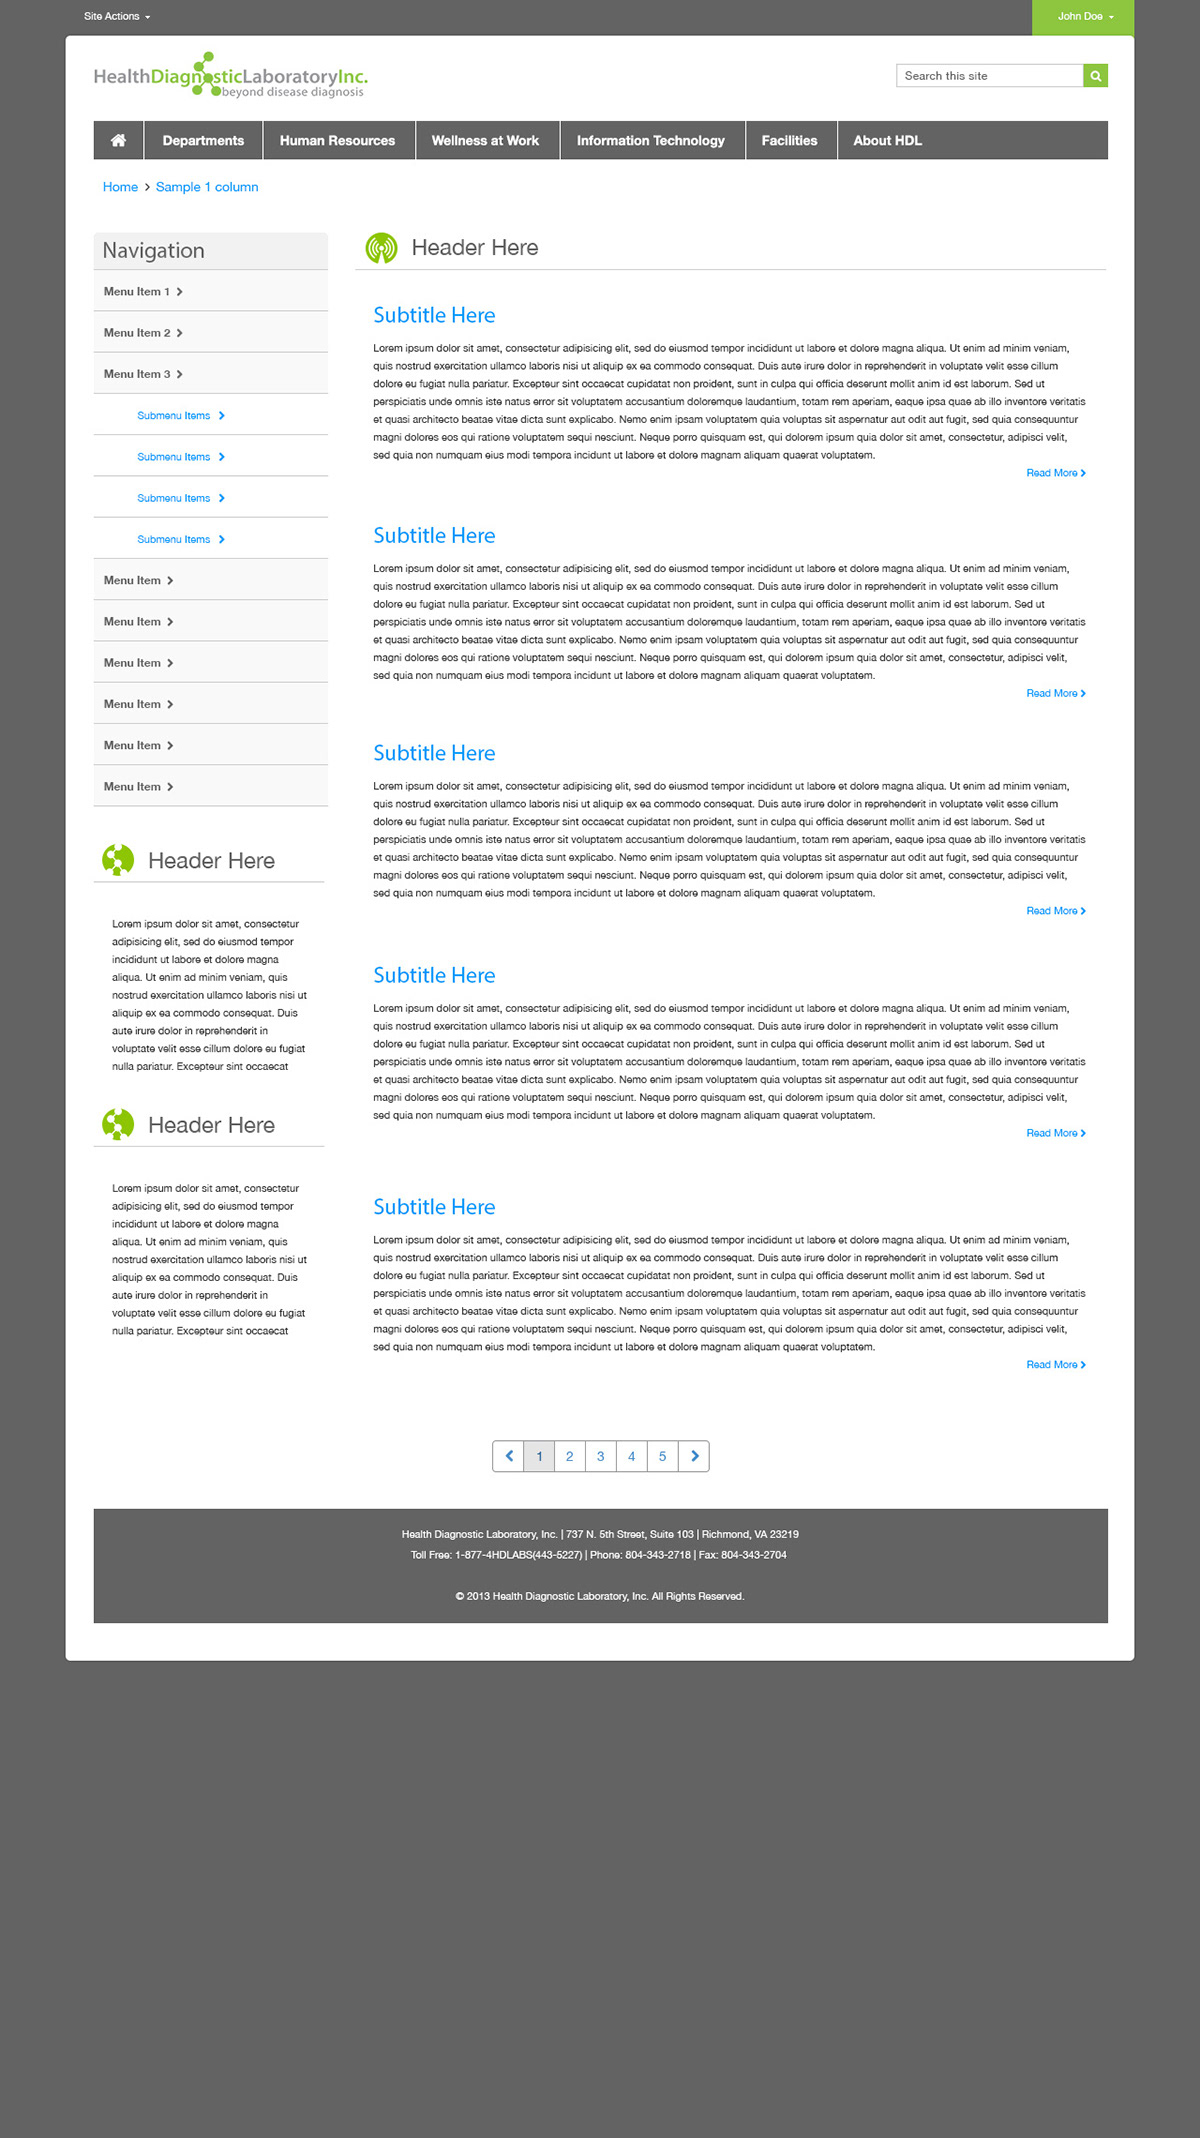 Sharepoint corporate colaboration documentation Repository